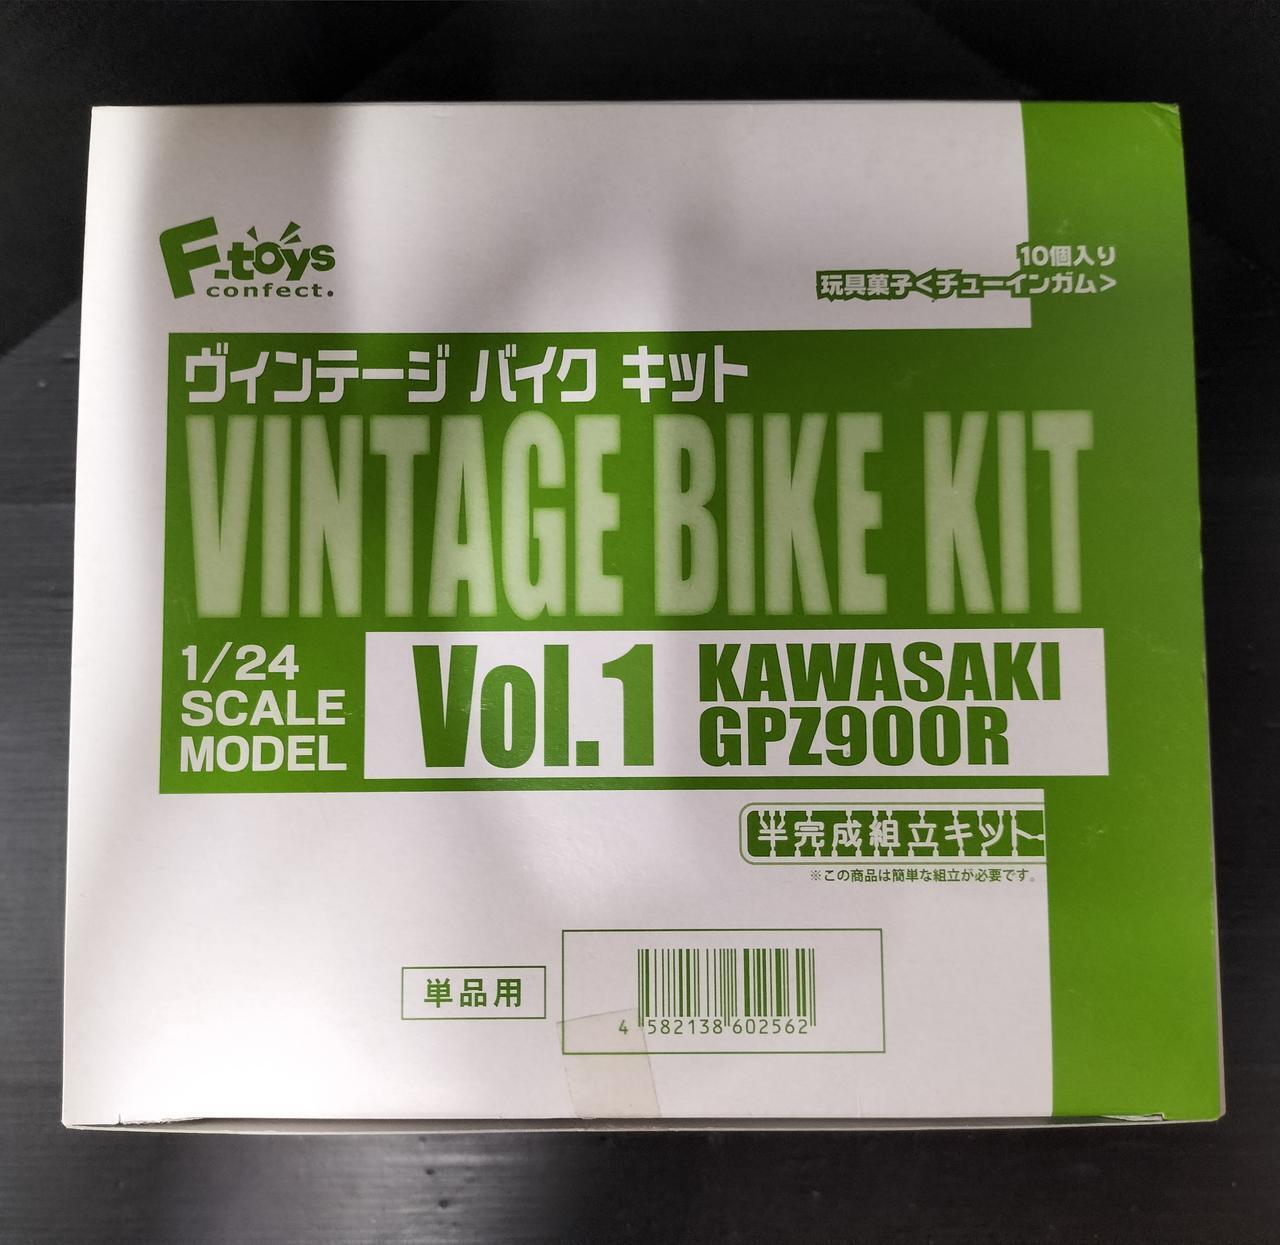 F-Toys 1/24 Vintage Bike Kit Vol.1 Kawasa Minicar